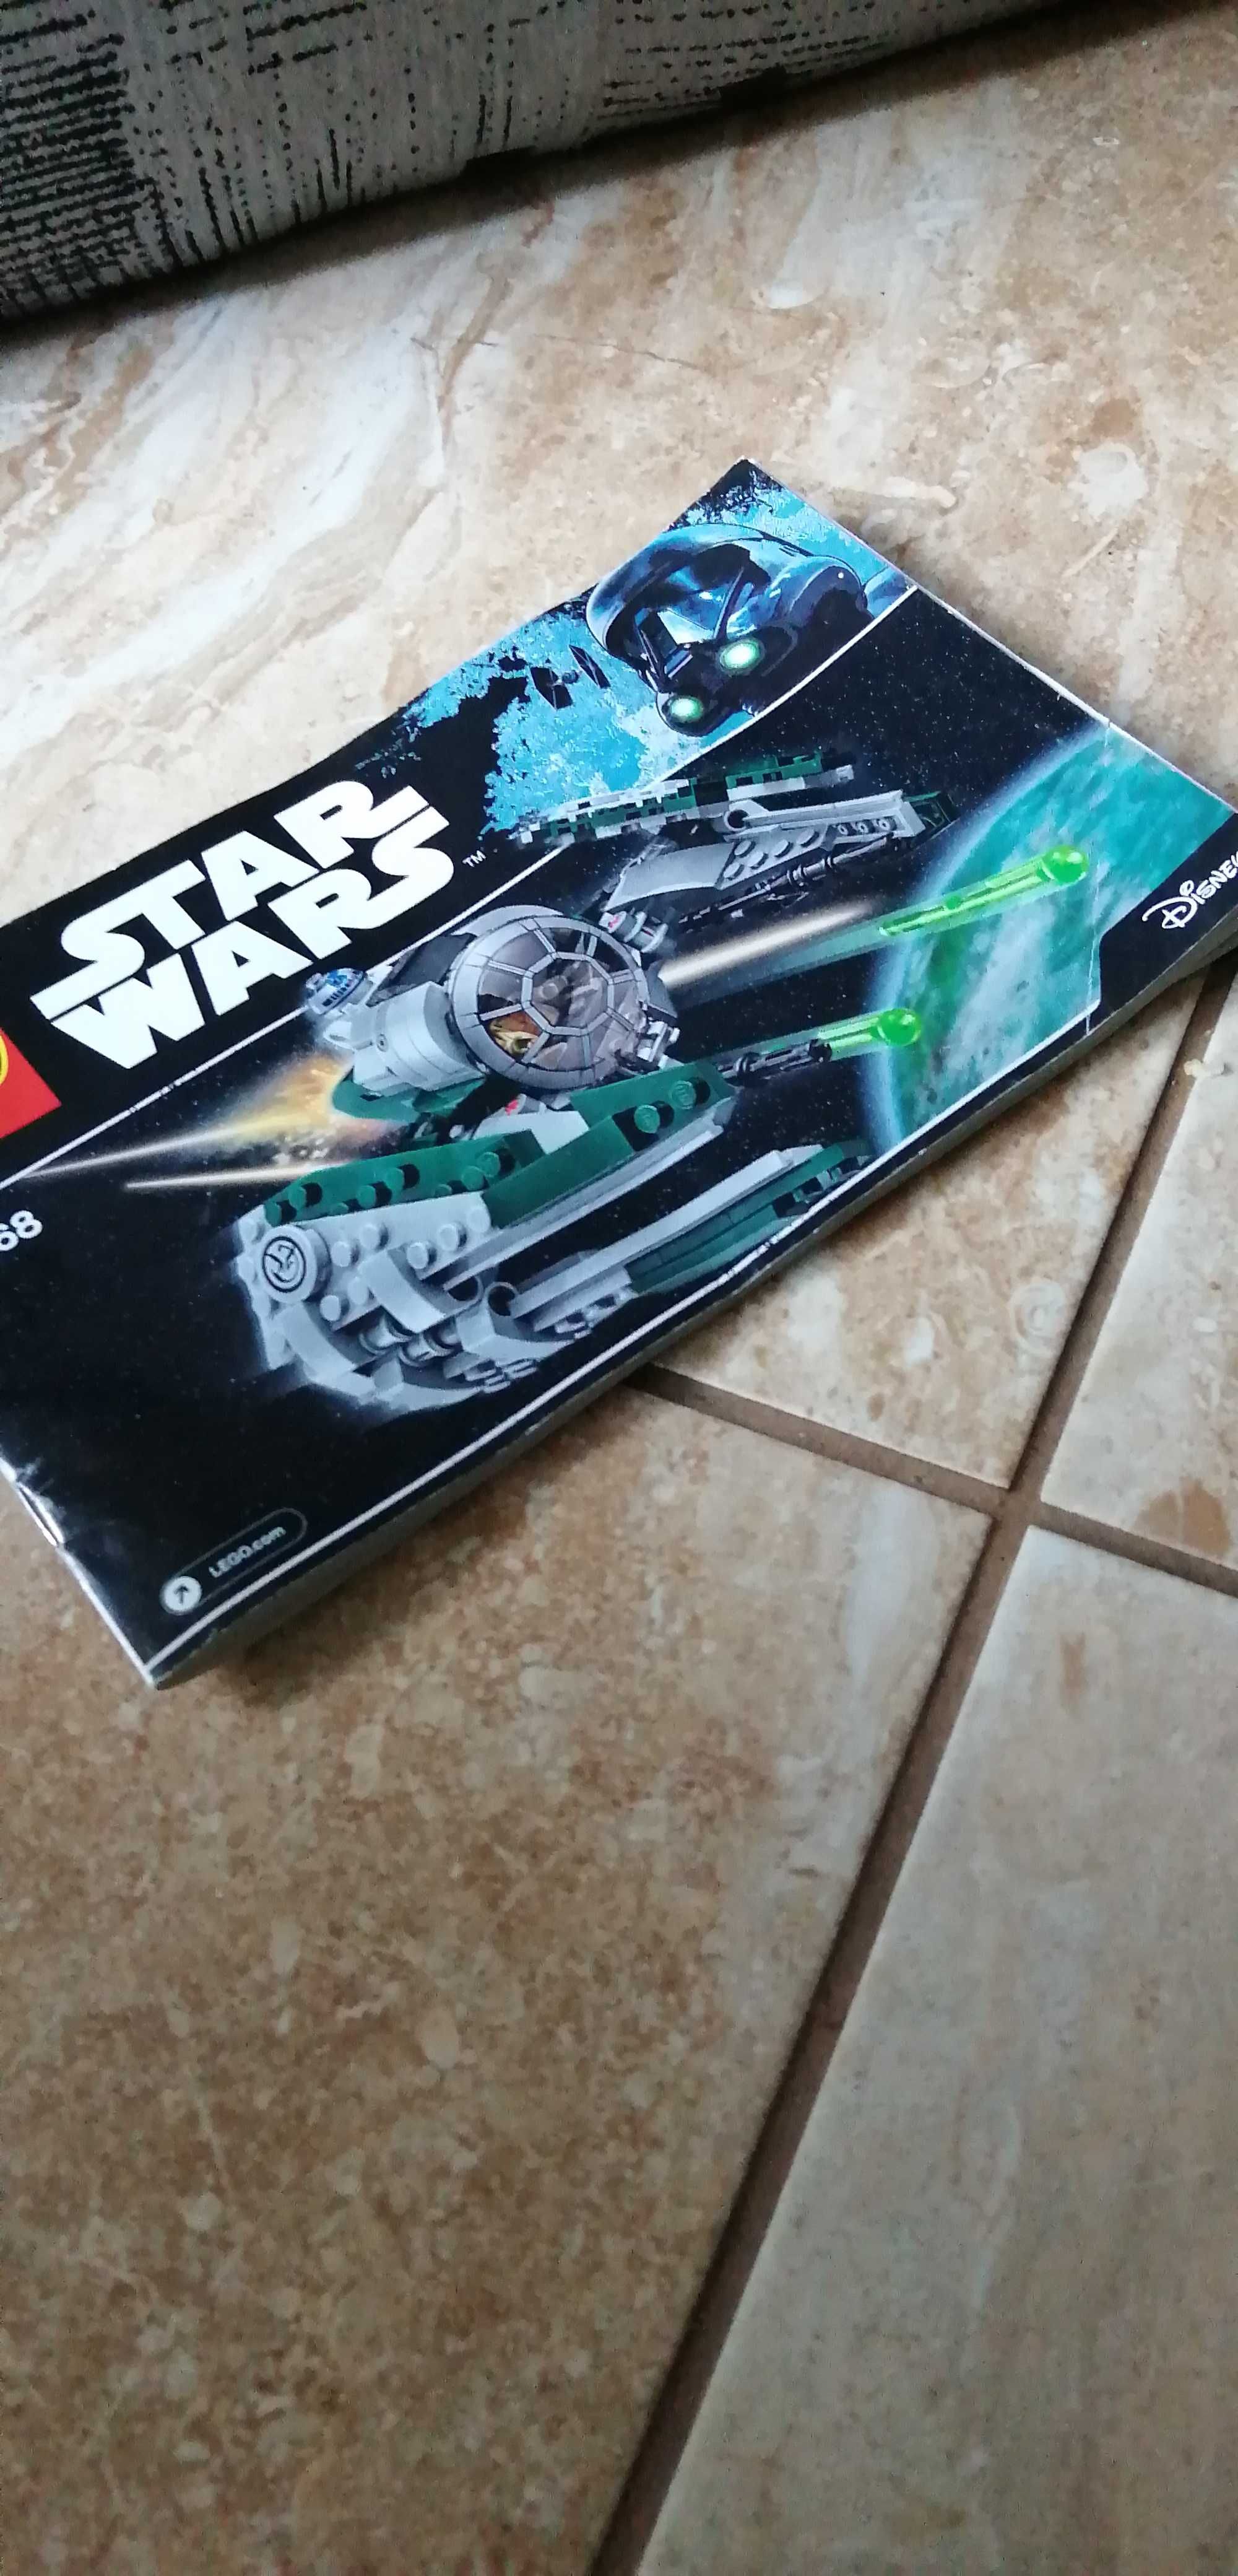 Lego star wars 75168 starwars kompletne instrukcja pudełko figurki